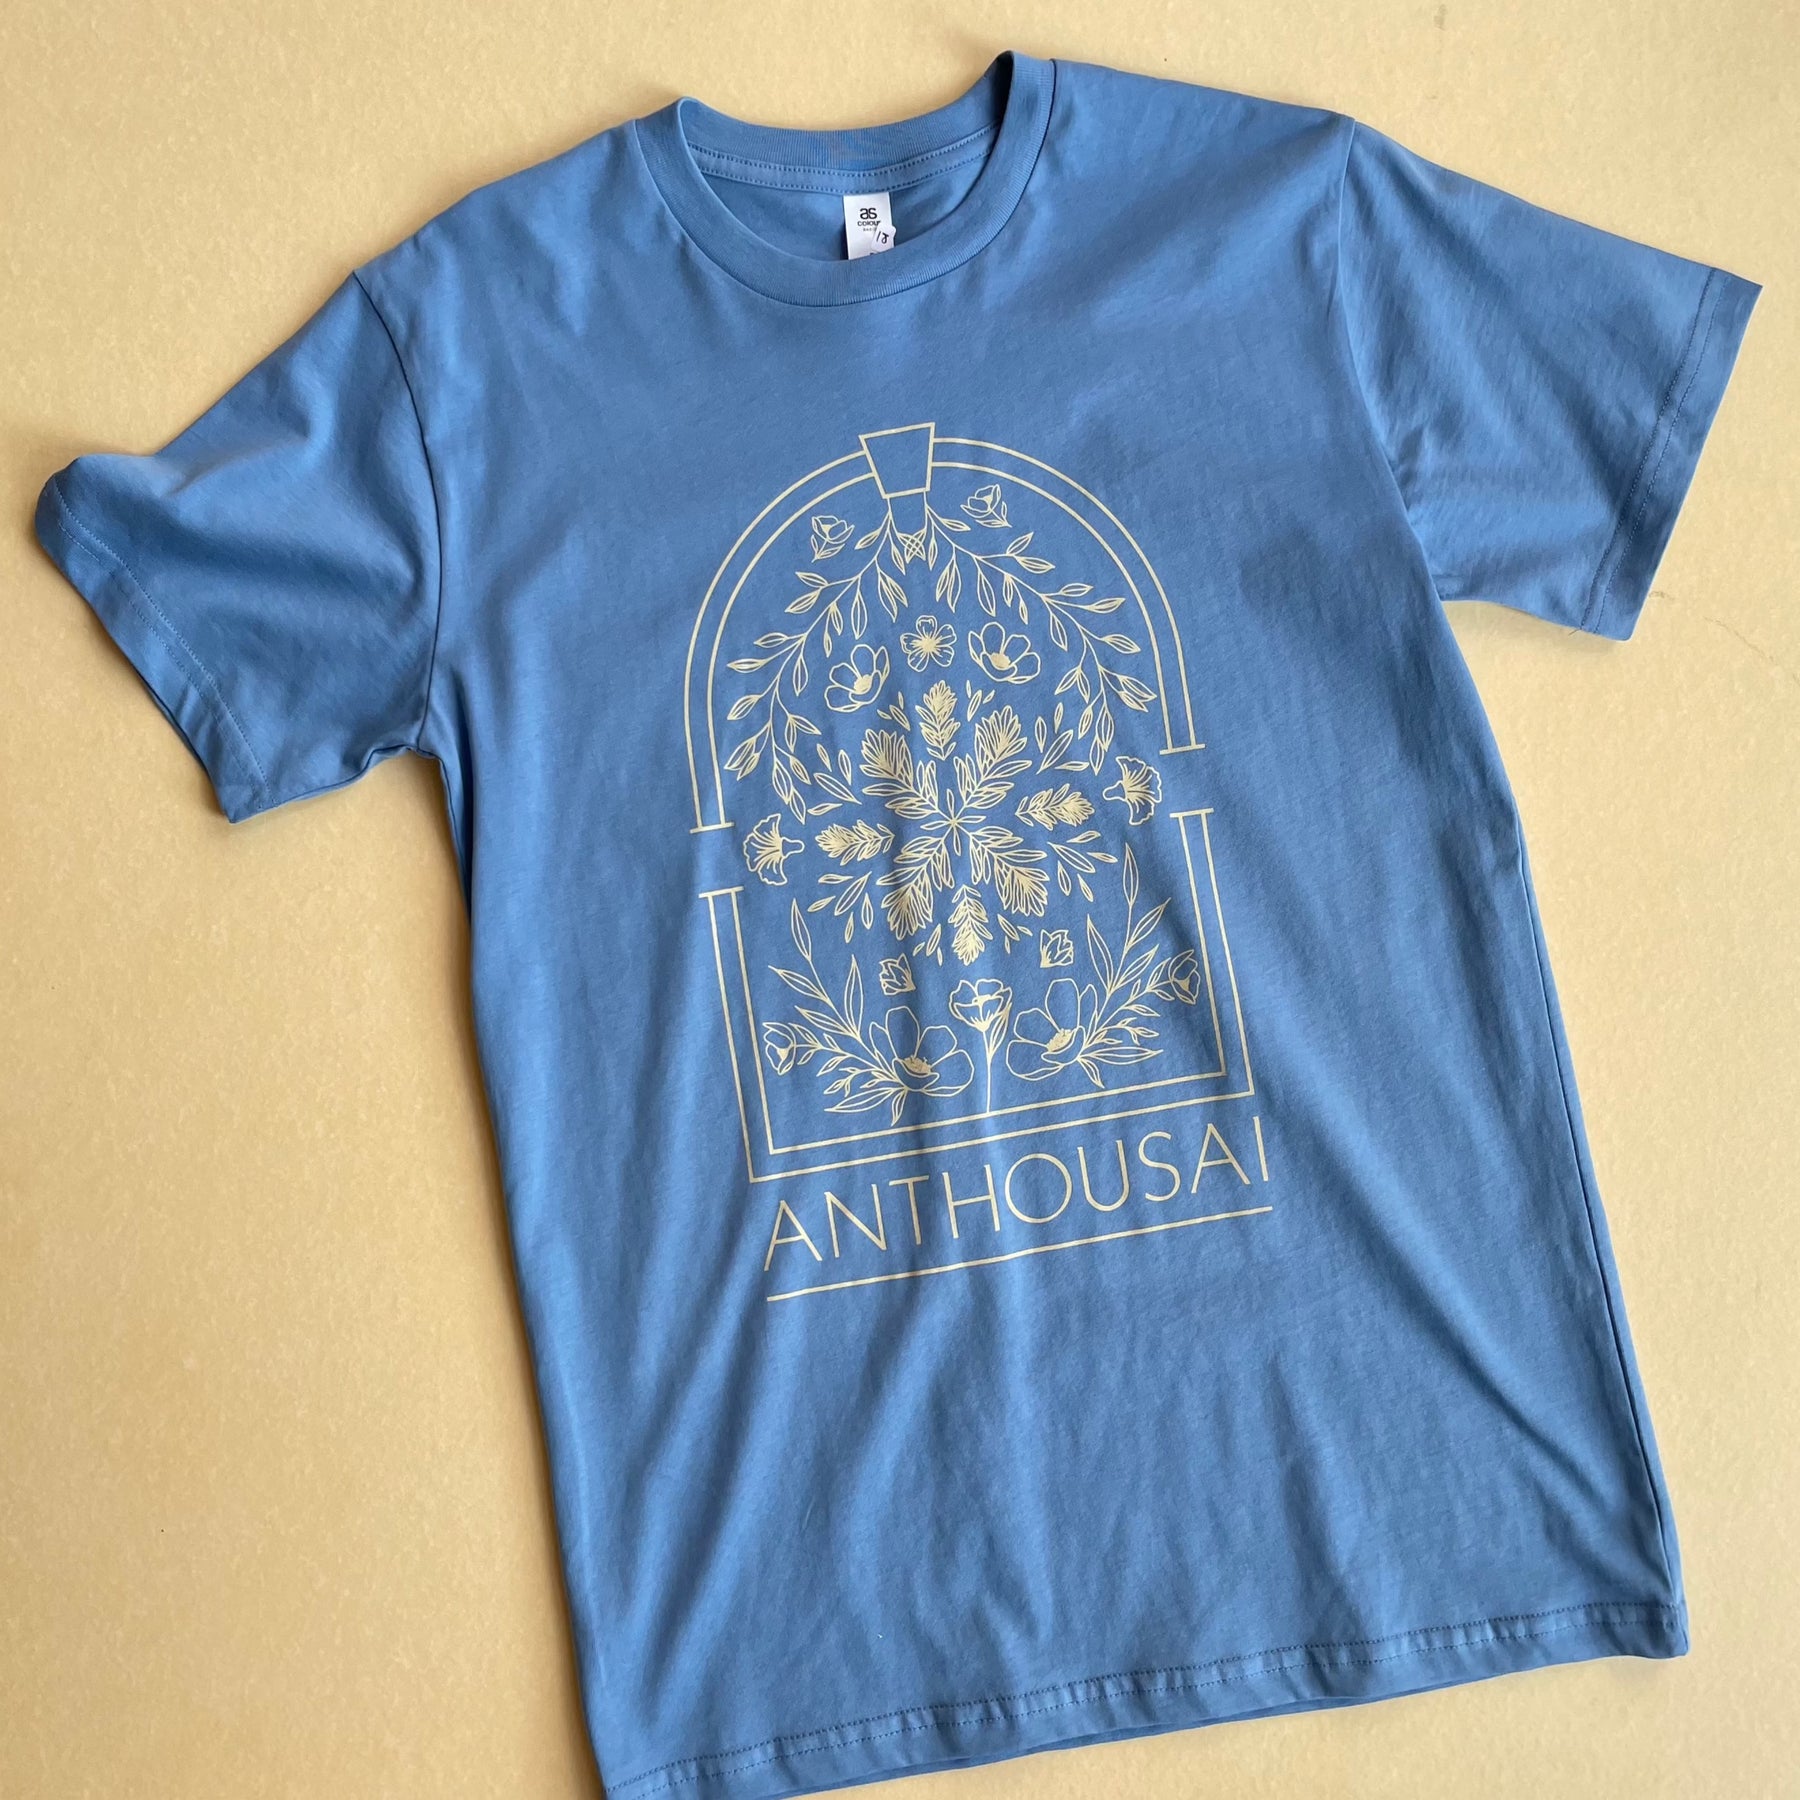 Anthousai Cornflower Blue T-Shirt